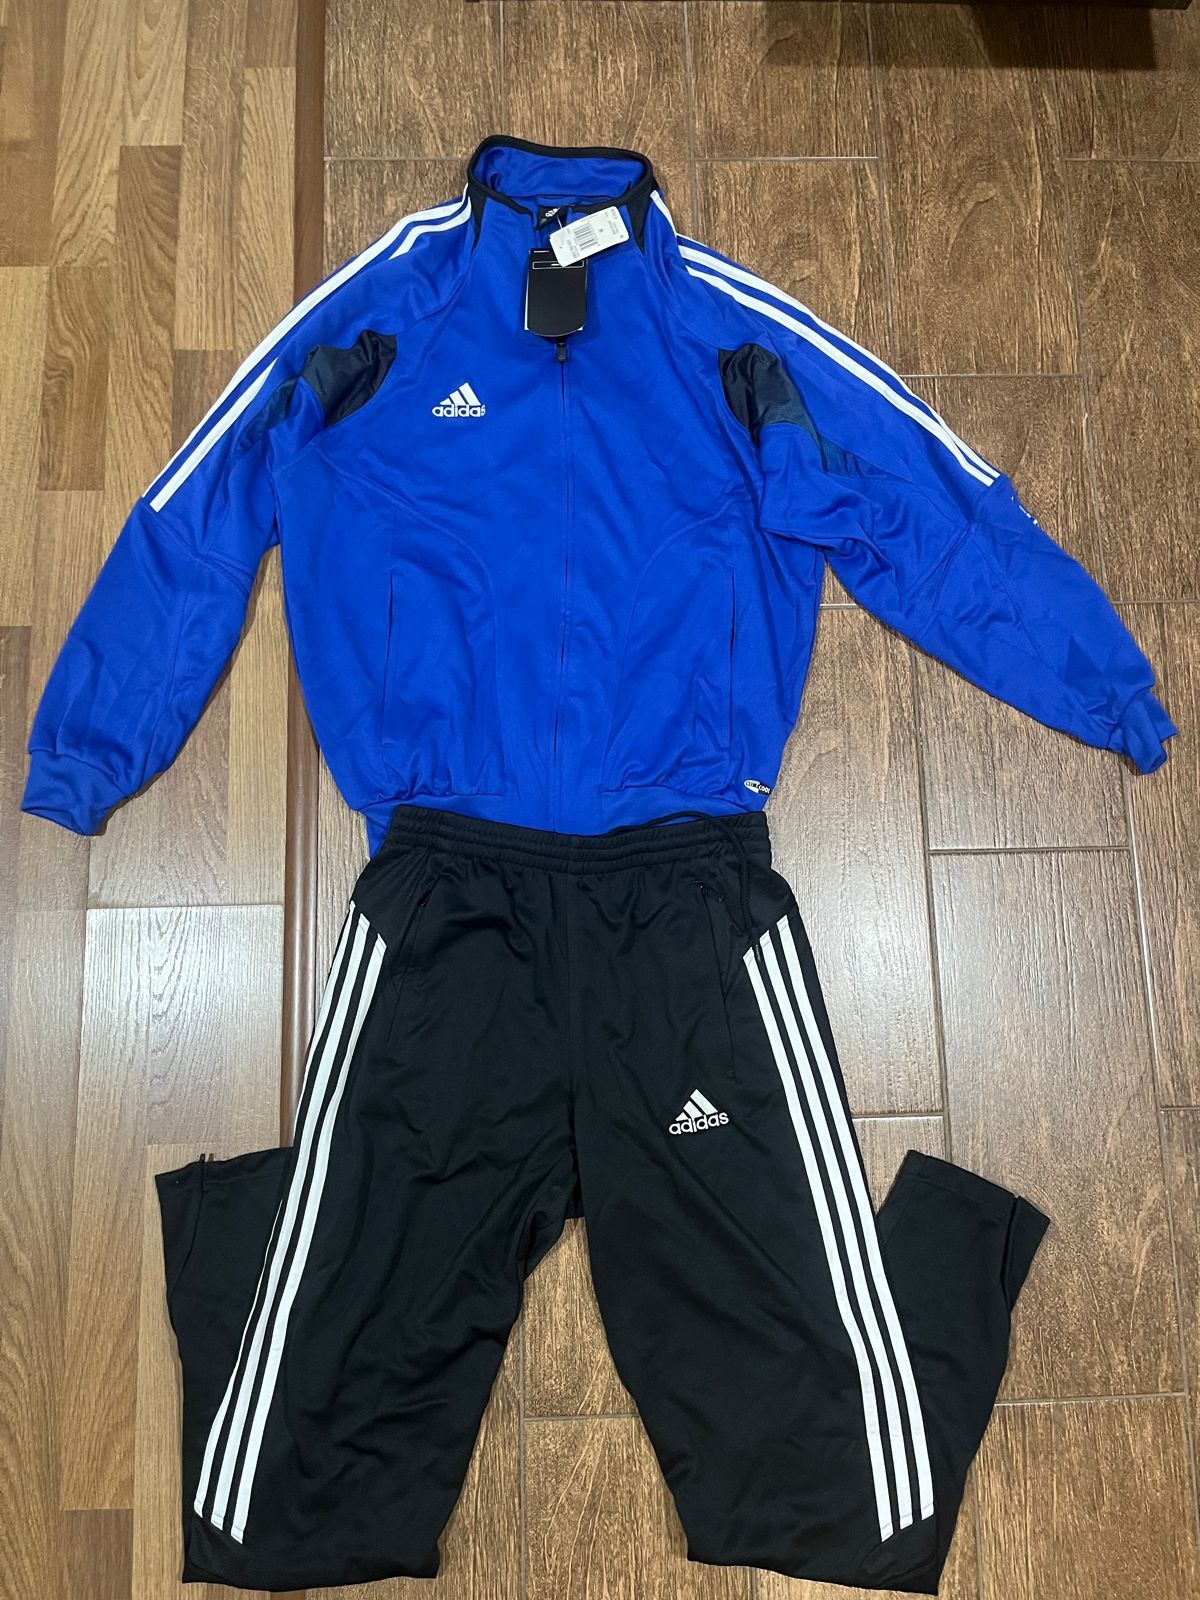 Adidas 2003 год, ретро, новый мужской спорт костюм, оригинал